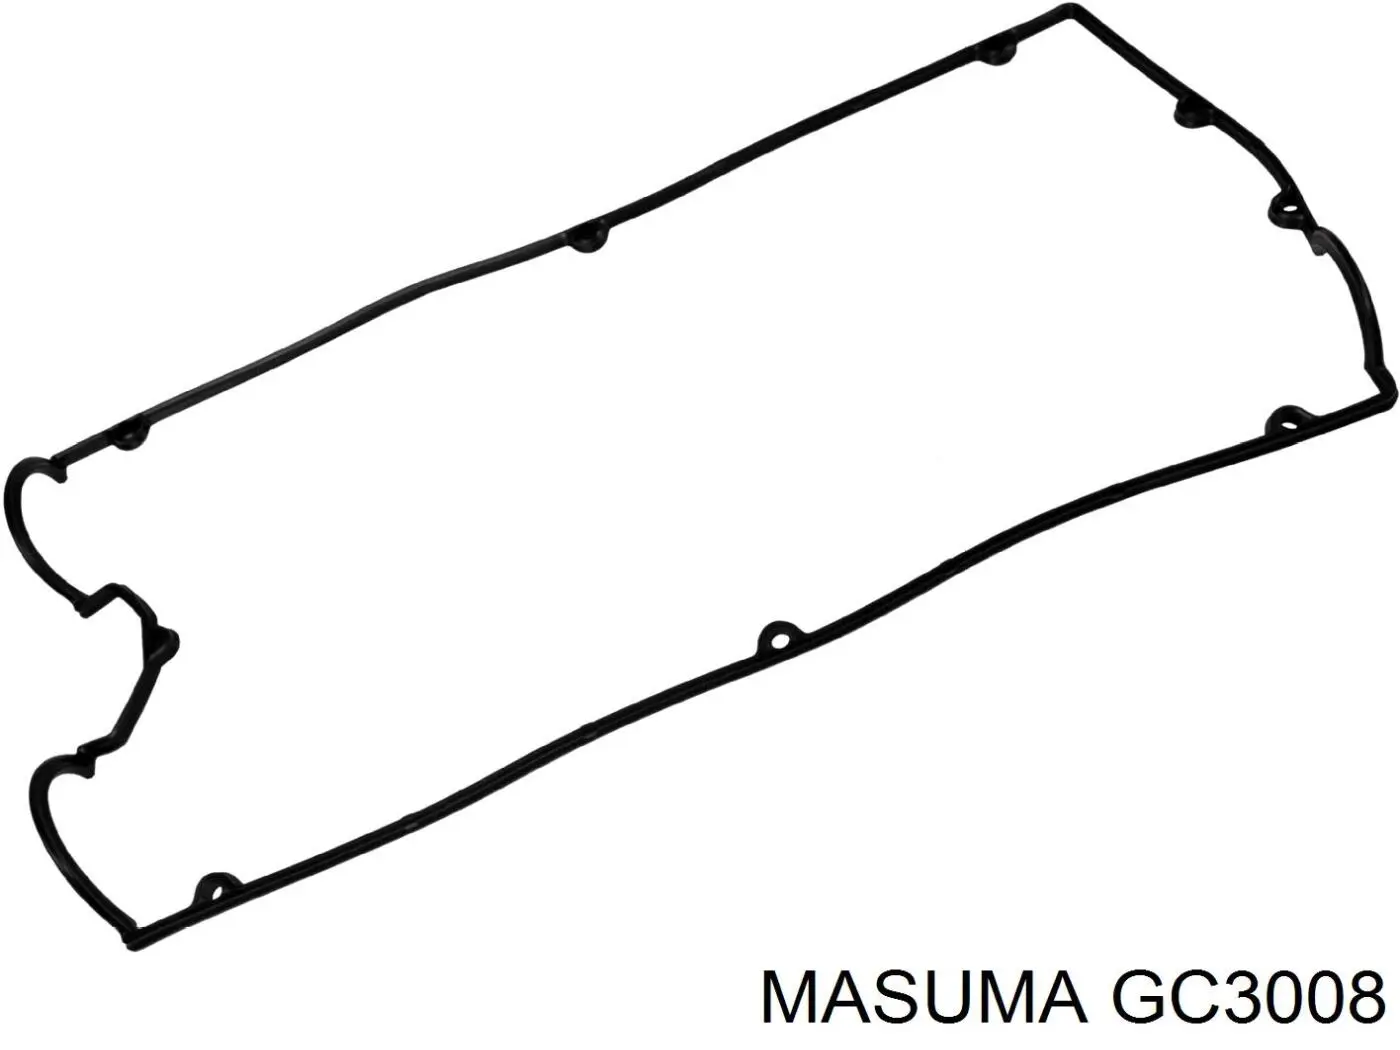 GC3008 Masuma junta tapa de balancines